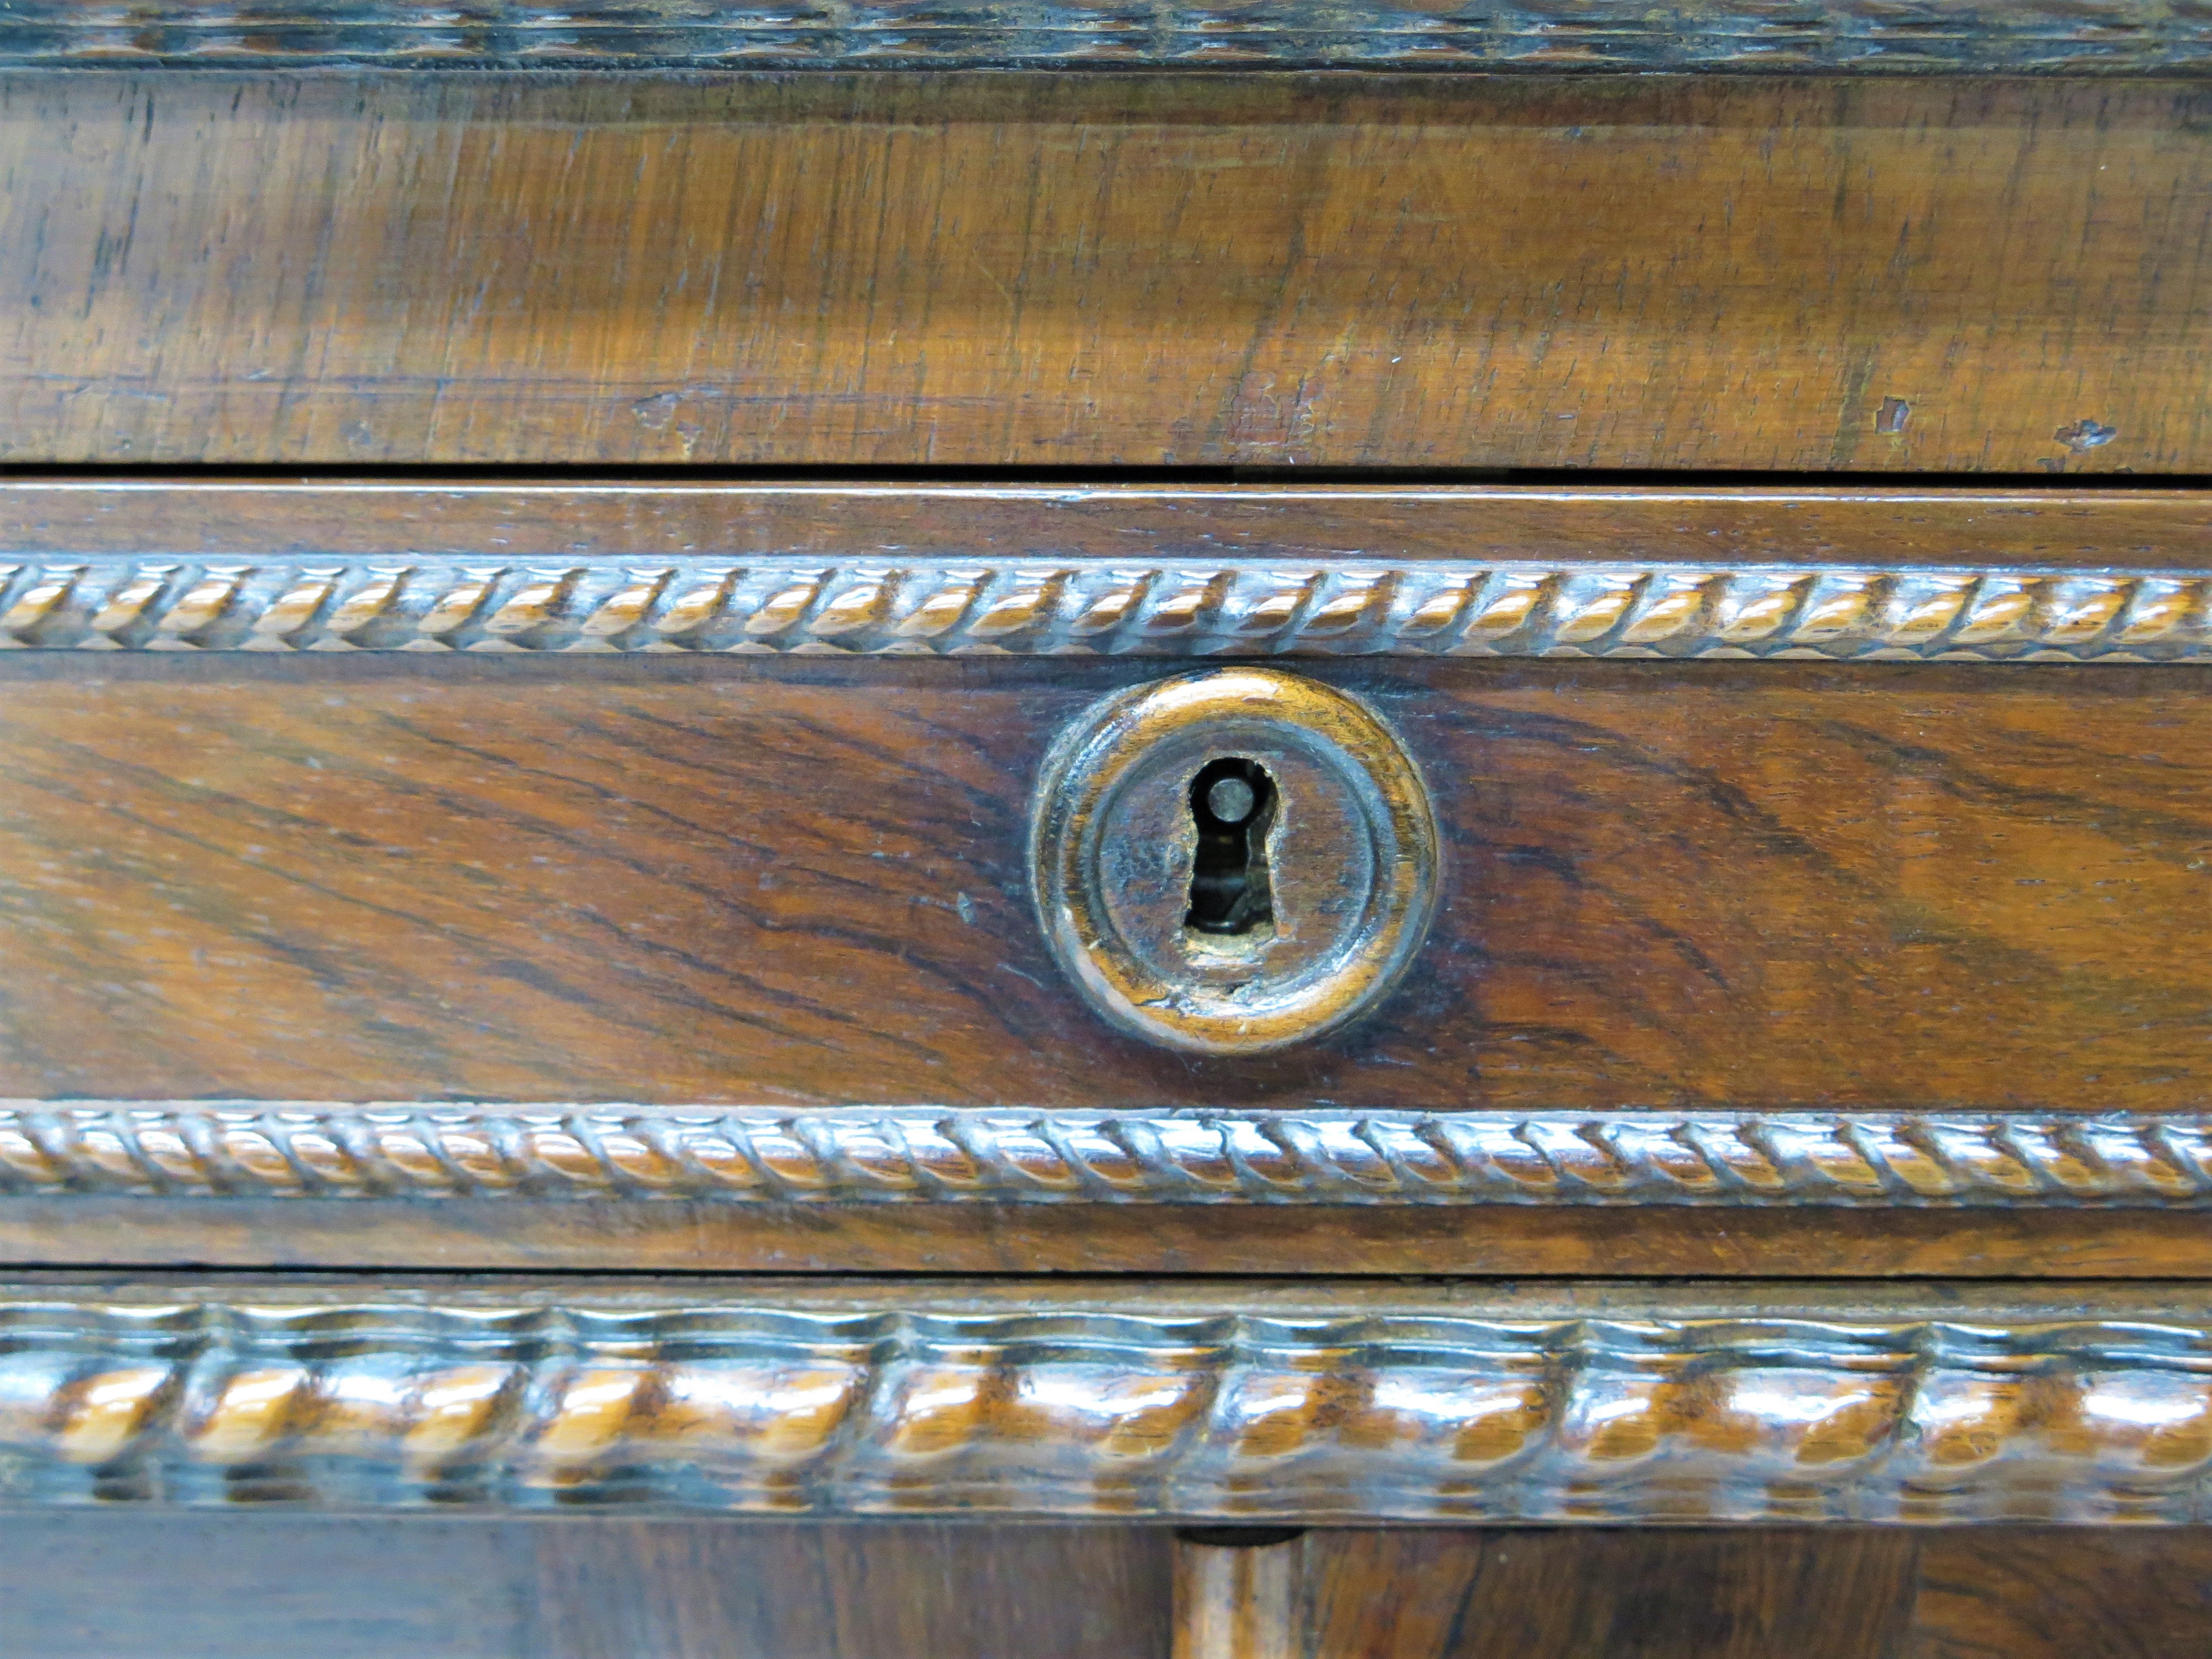 An English Regency Rosewood Chiffonier Bookcase or Bar